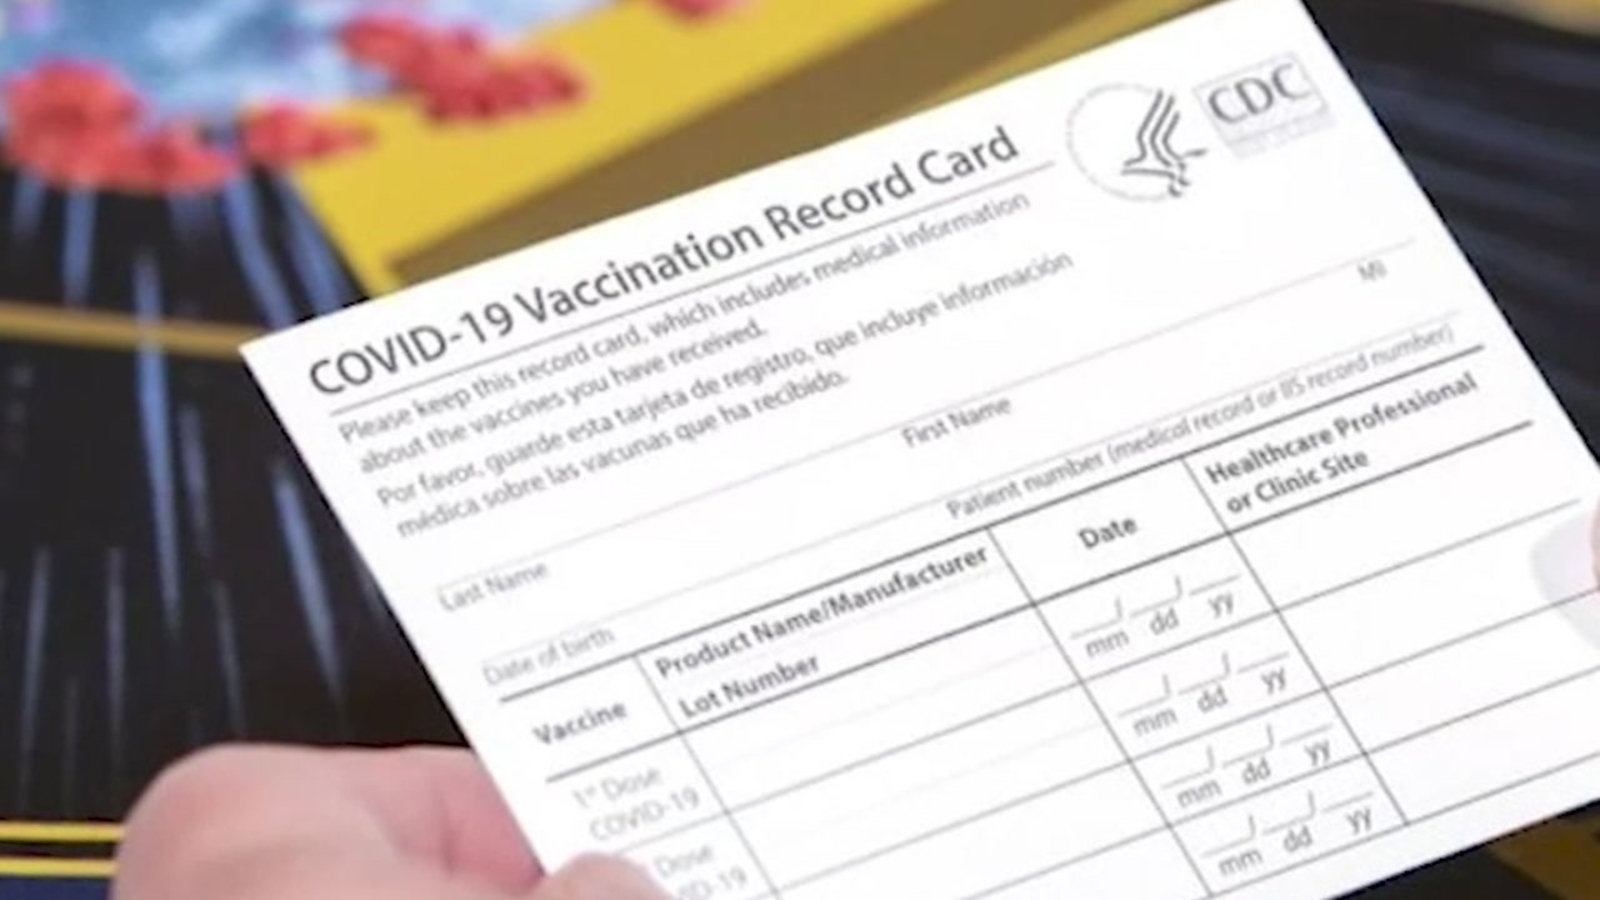 OZ - Digitizing Vaccine Cards